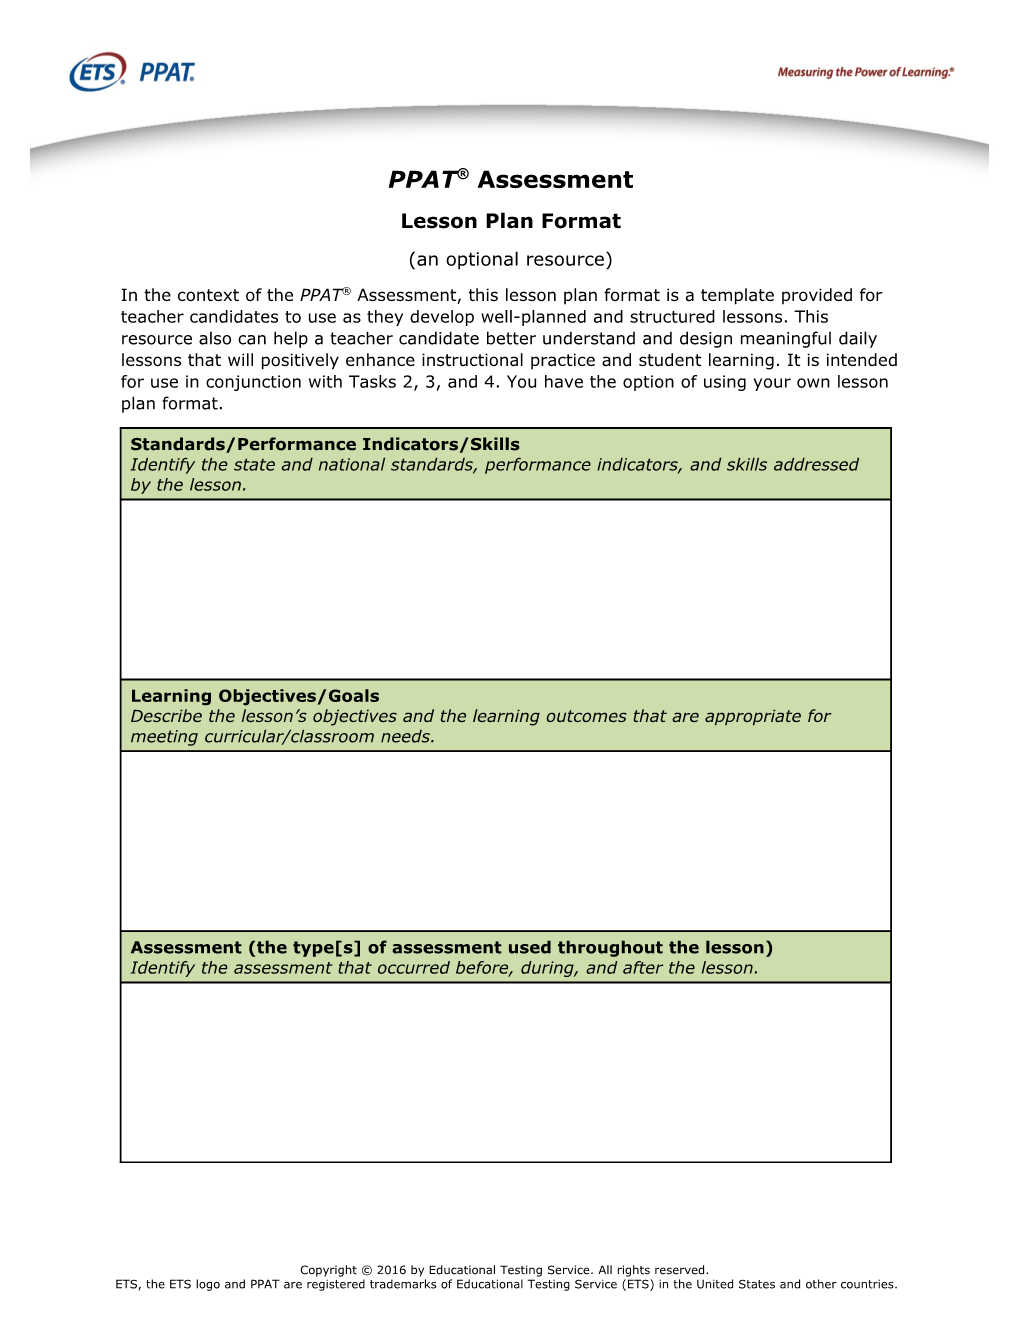 PPAT Assessment